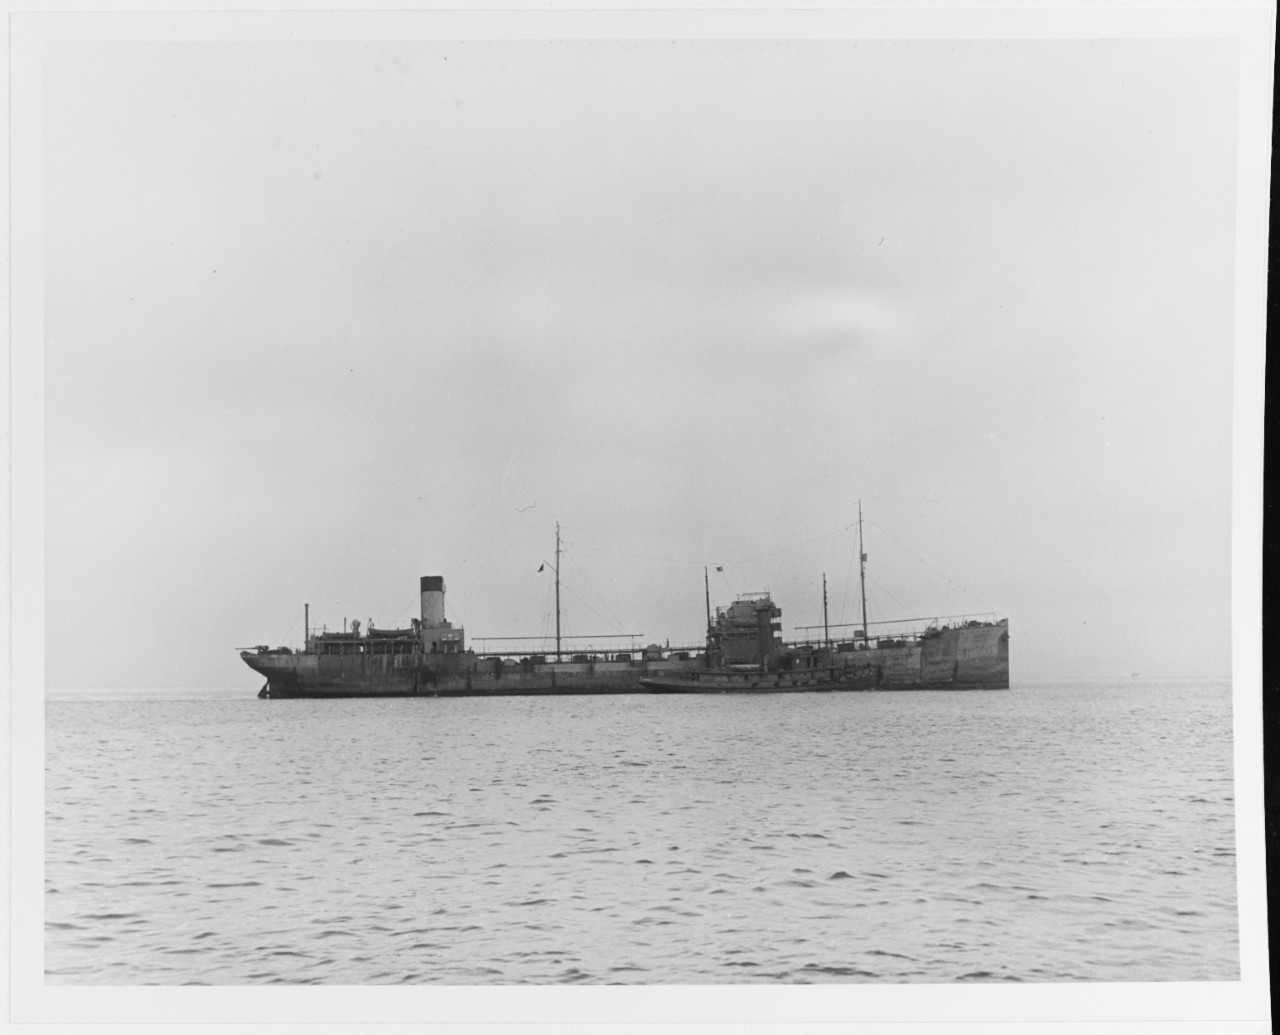 S.S. LUXOR (British Merchant Tanker, 1930-1965), under this name 1930-1951